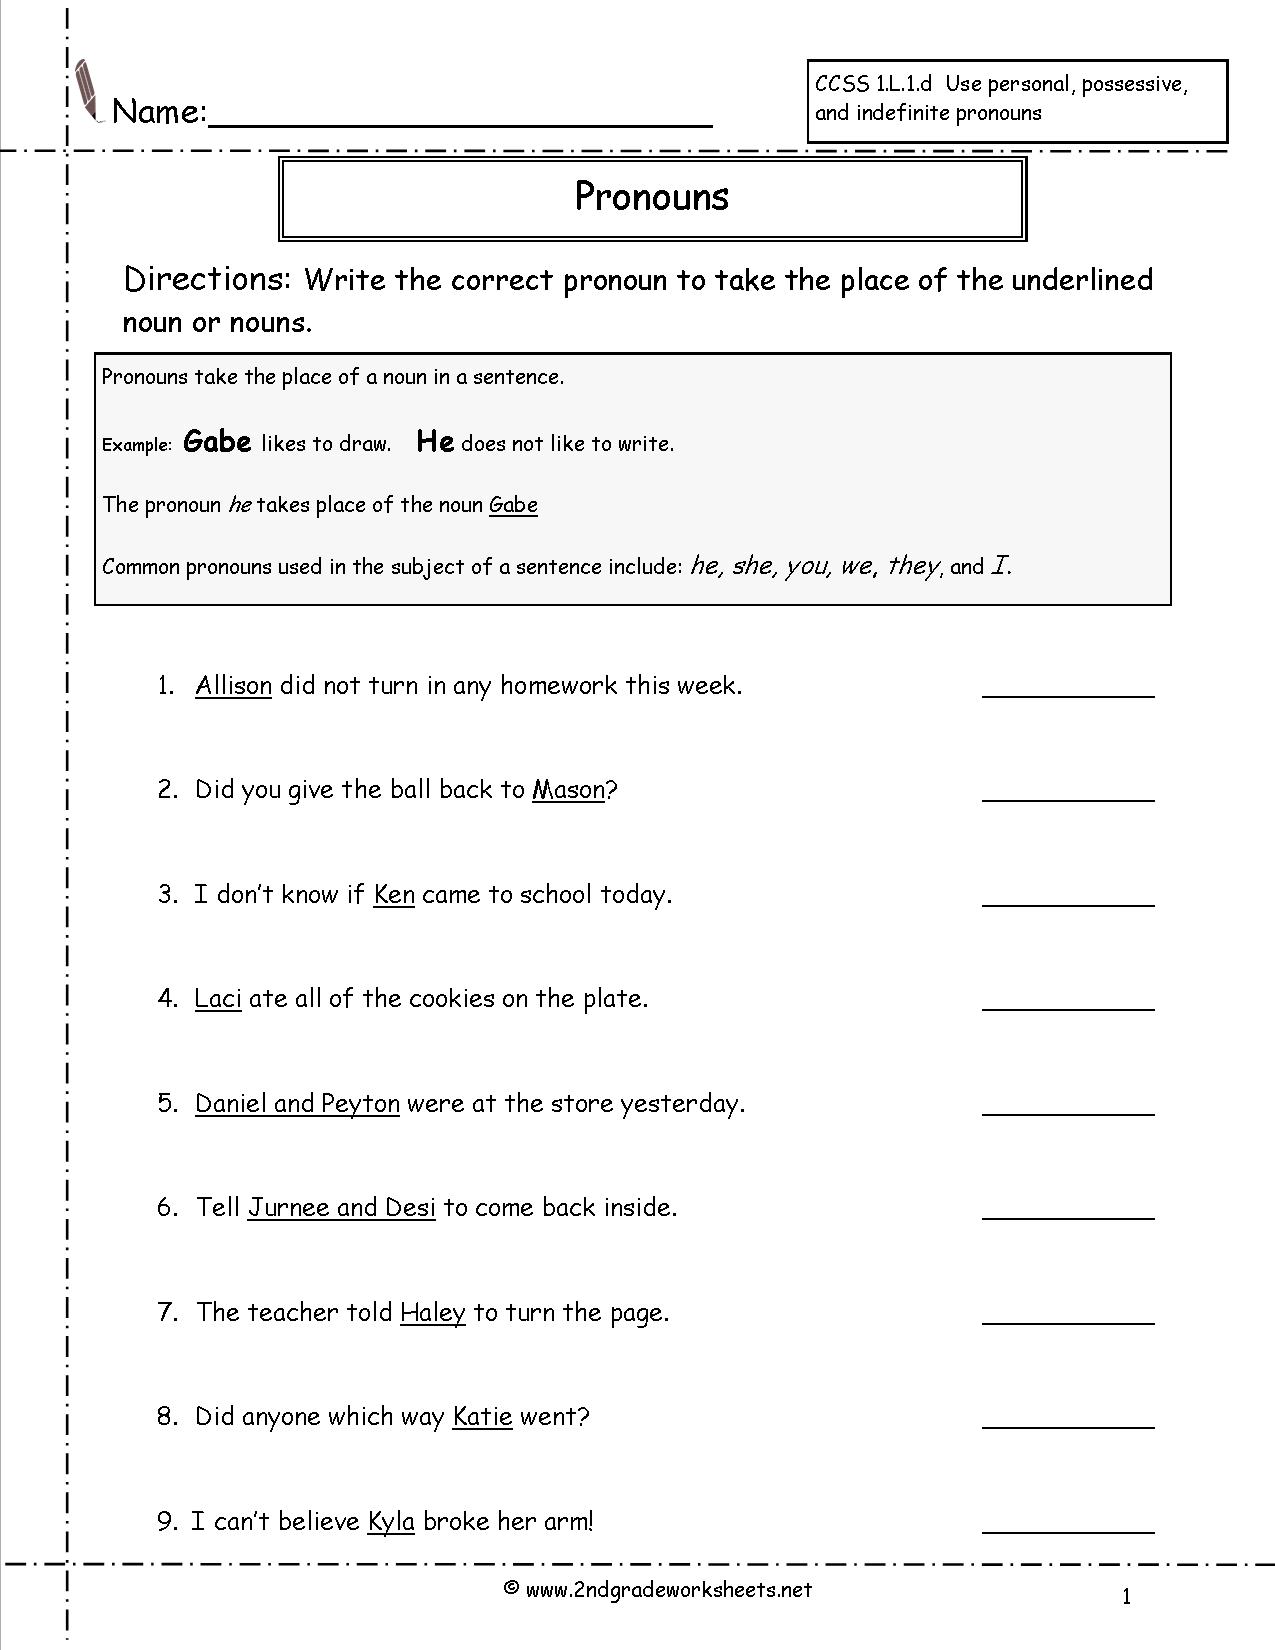 nominative-pronouns-worksheets-for-grade-2-worksheet-resume-examples